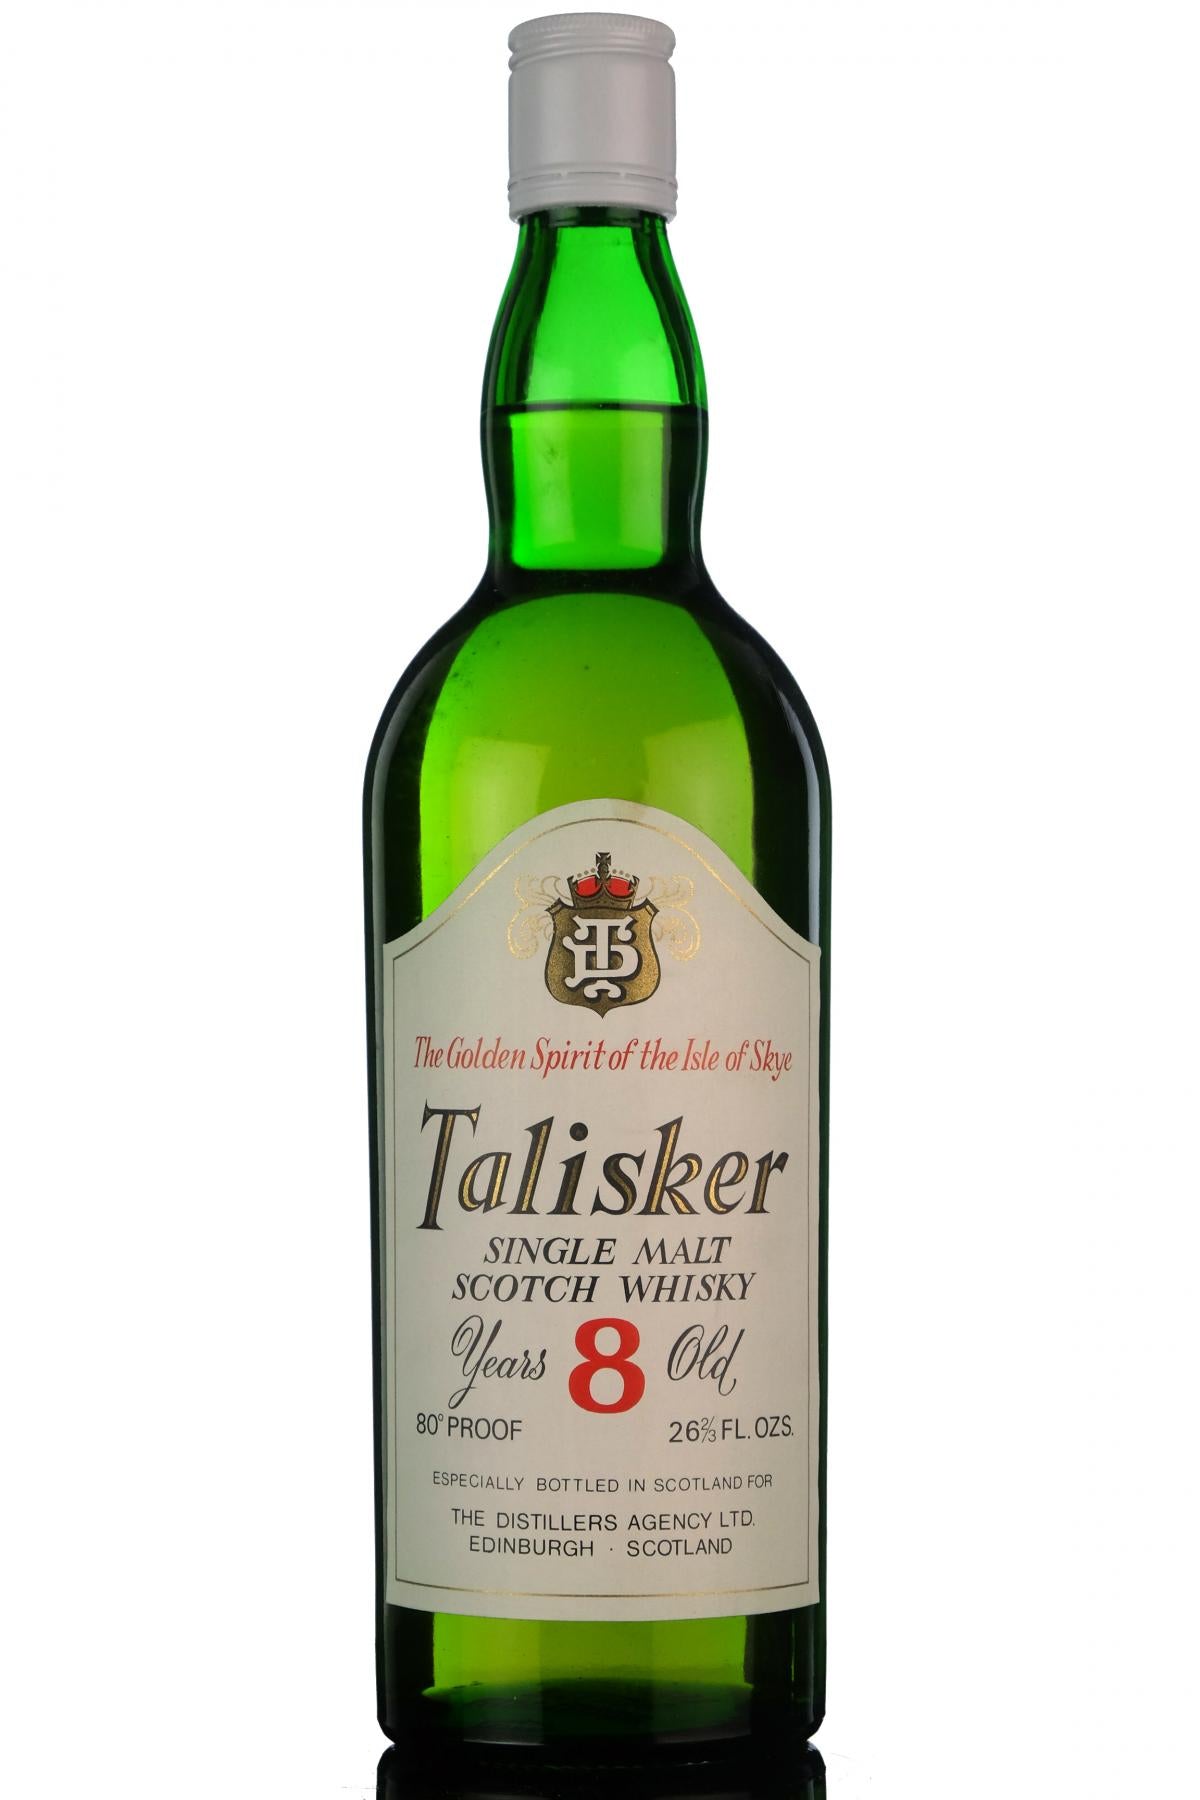 talisker 8 year old, bottled early 1970s, whisky sample,